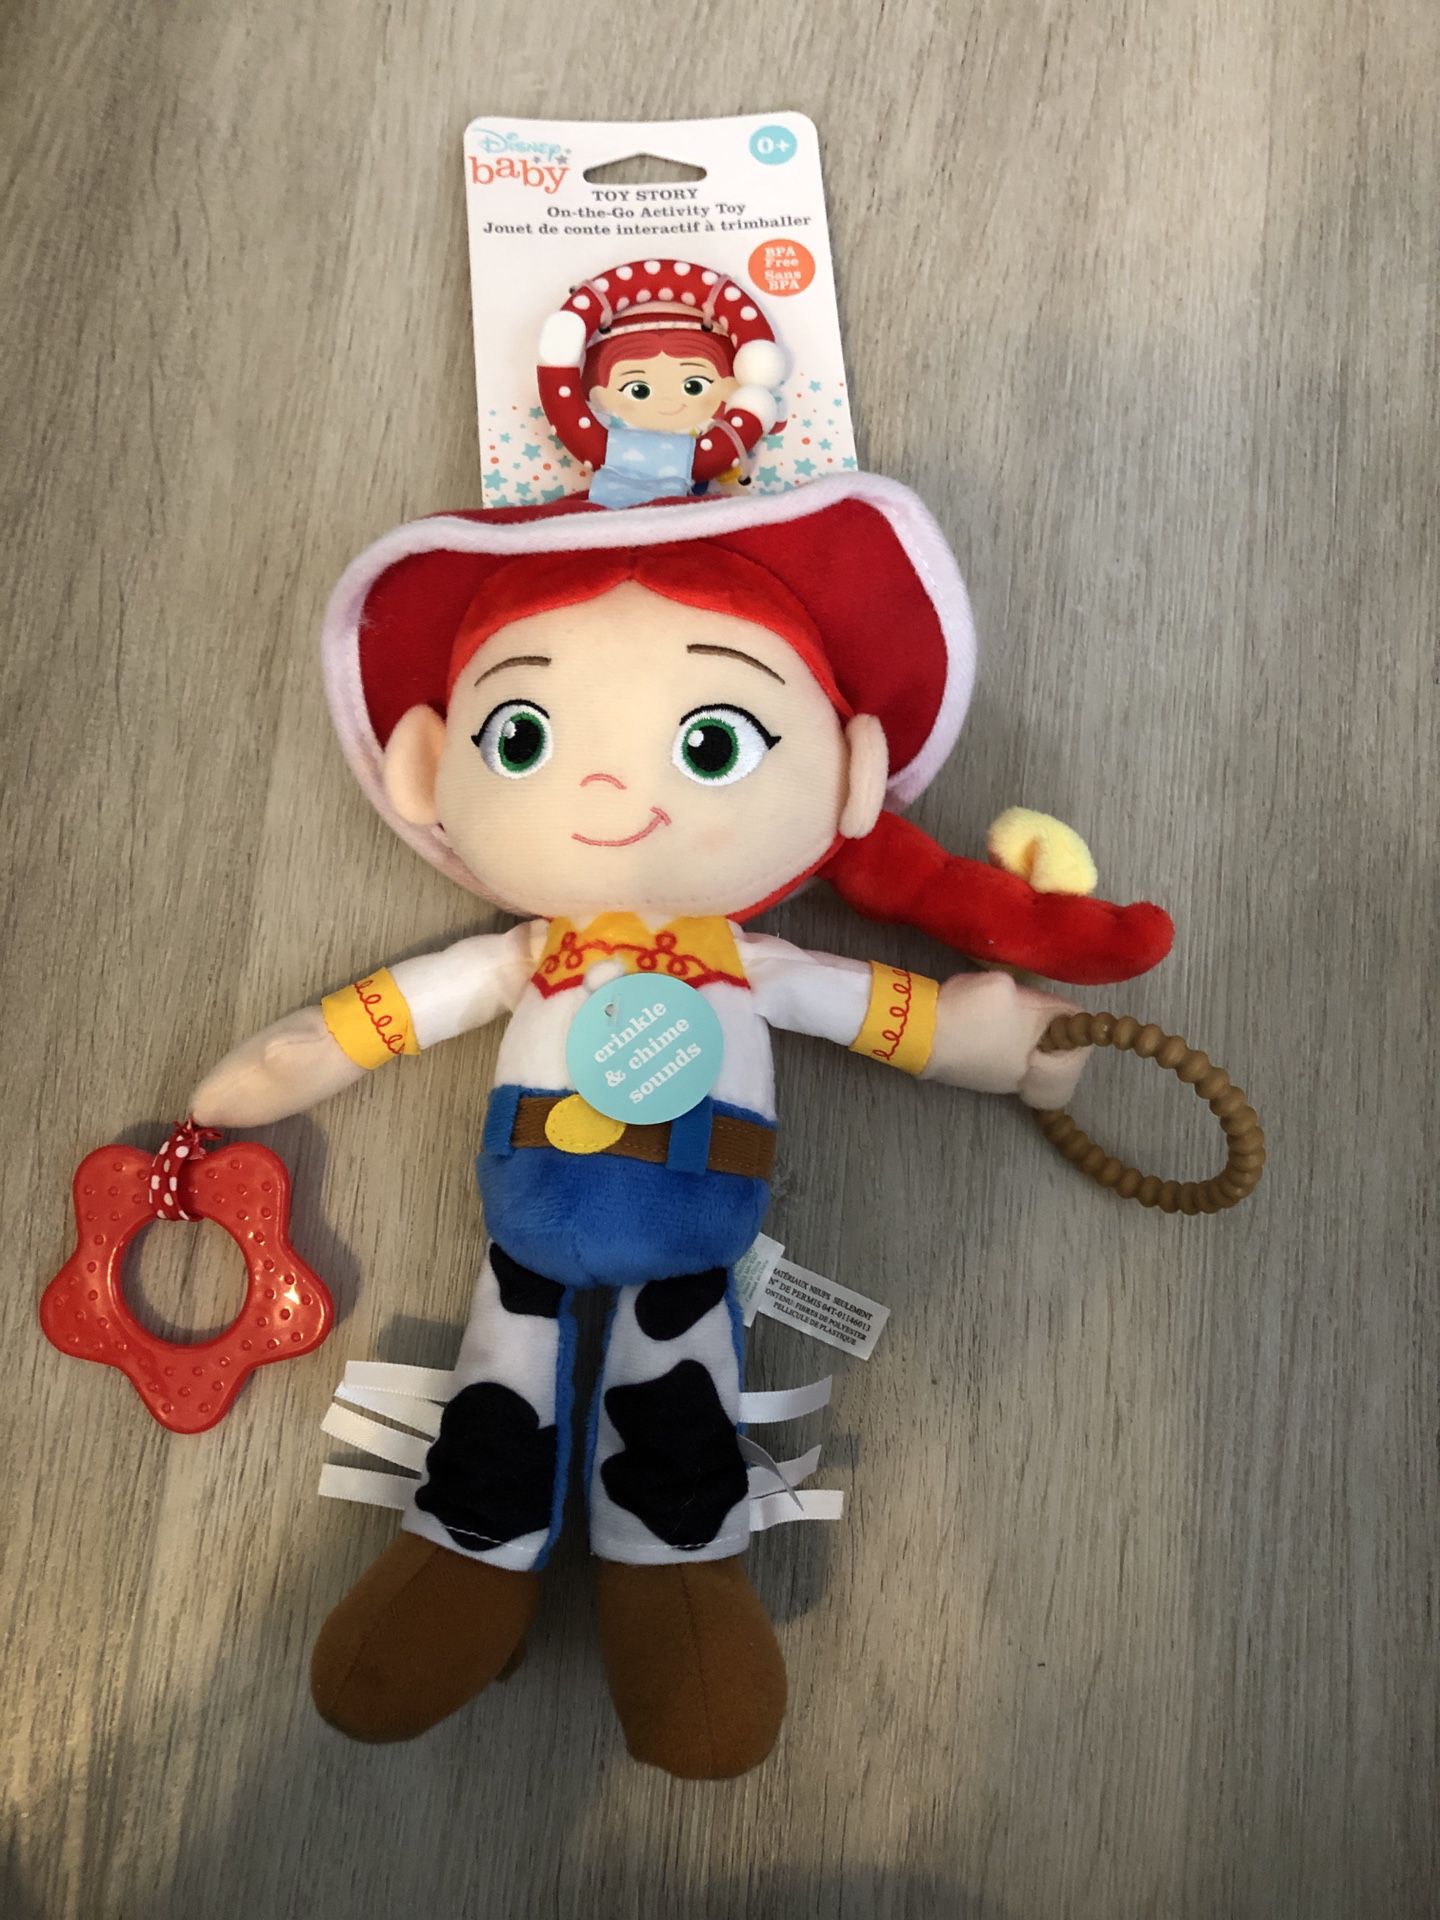 Kids Preferred Disney Baby Toy Story Jessie On The Go Activity Toy new